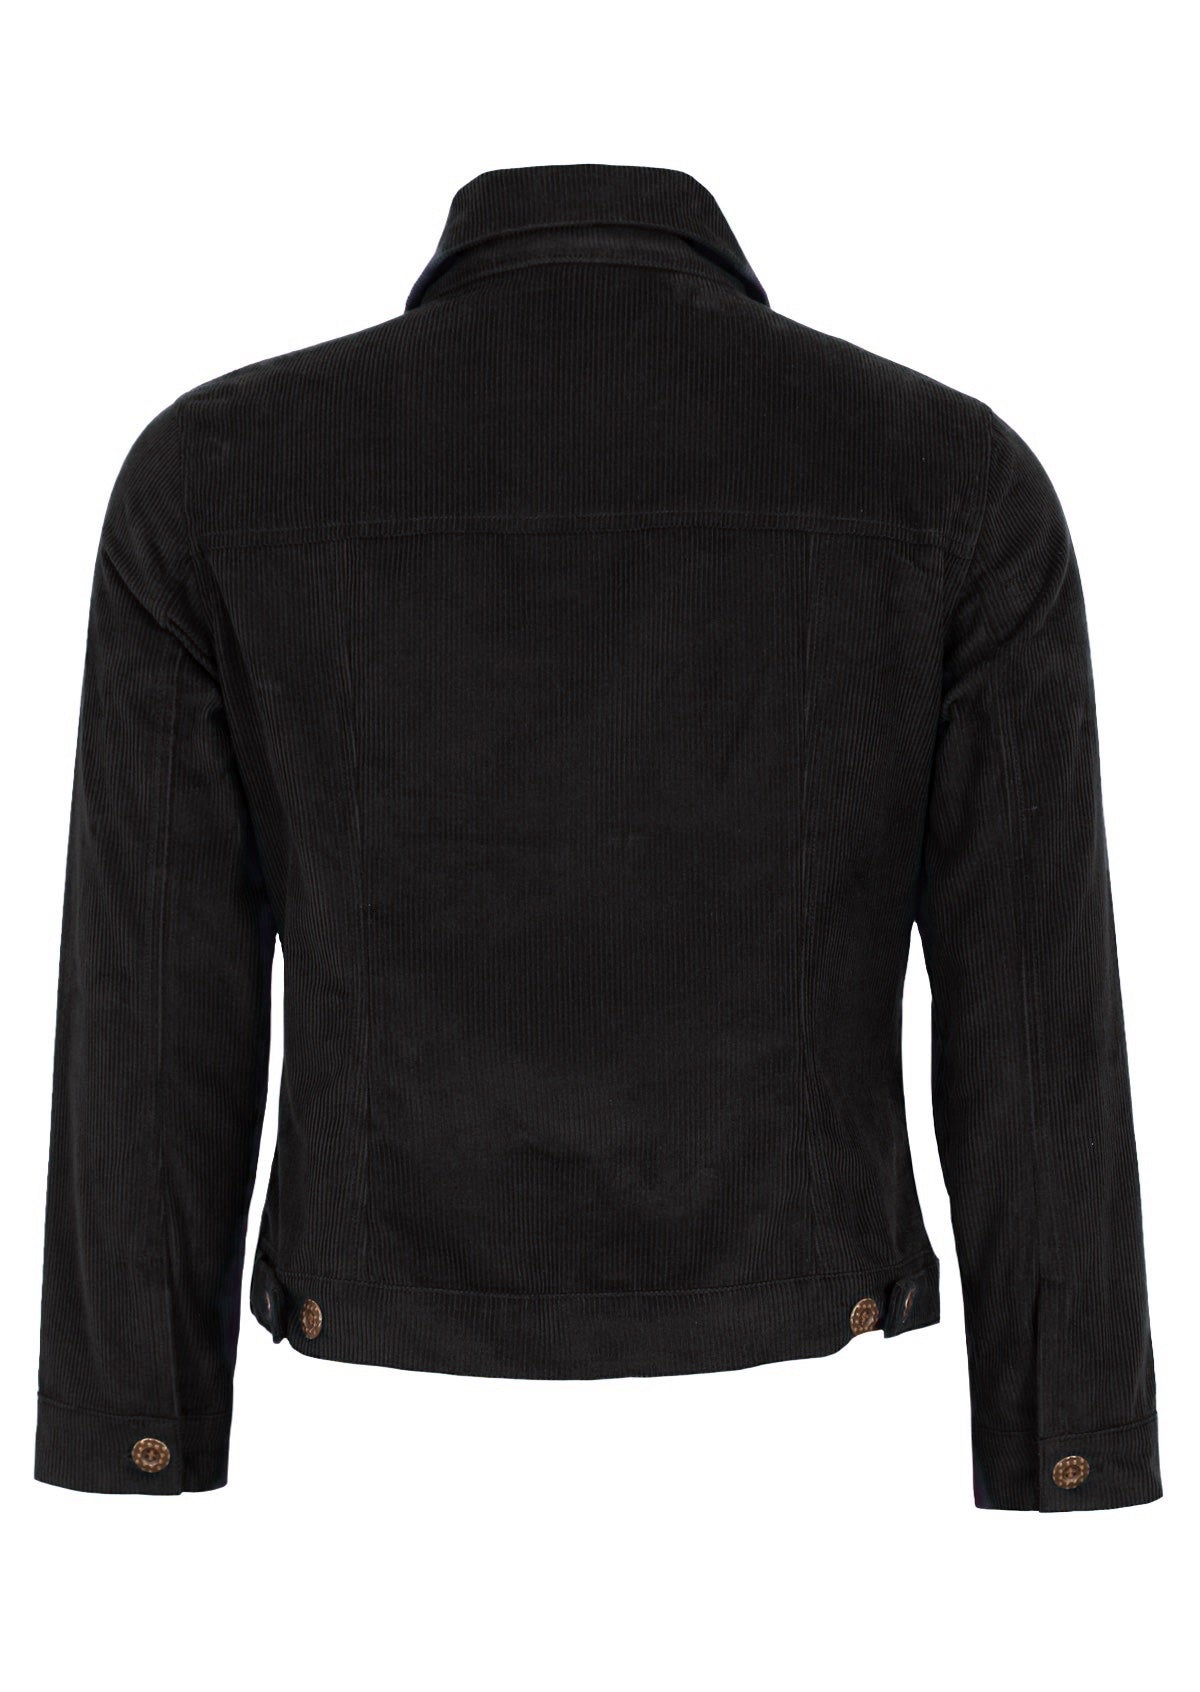 Cotton corduroy jacket with adjustable tabs